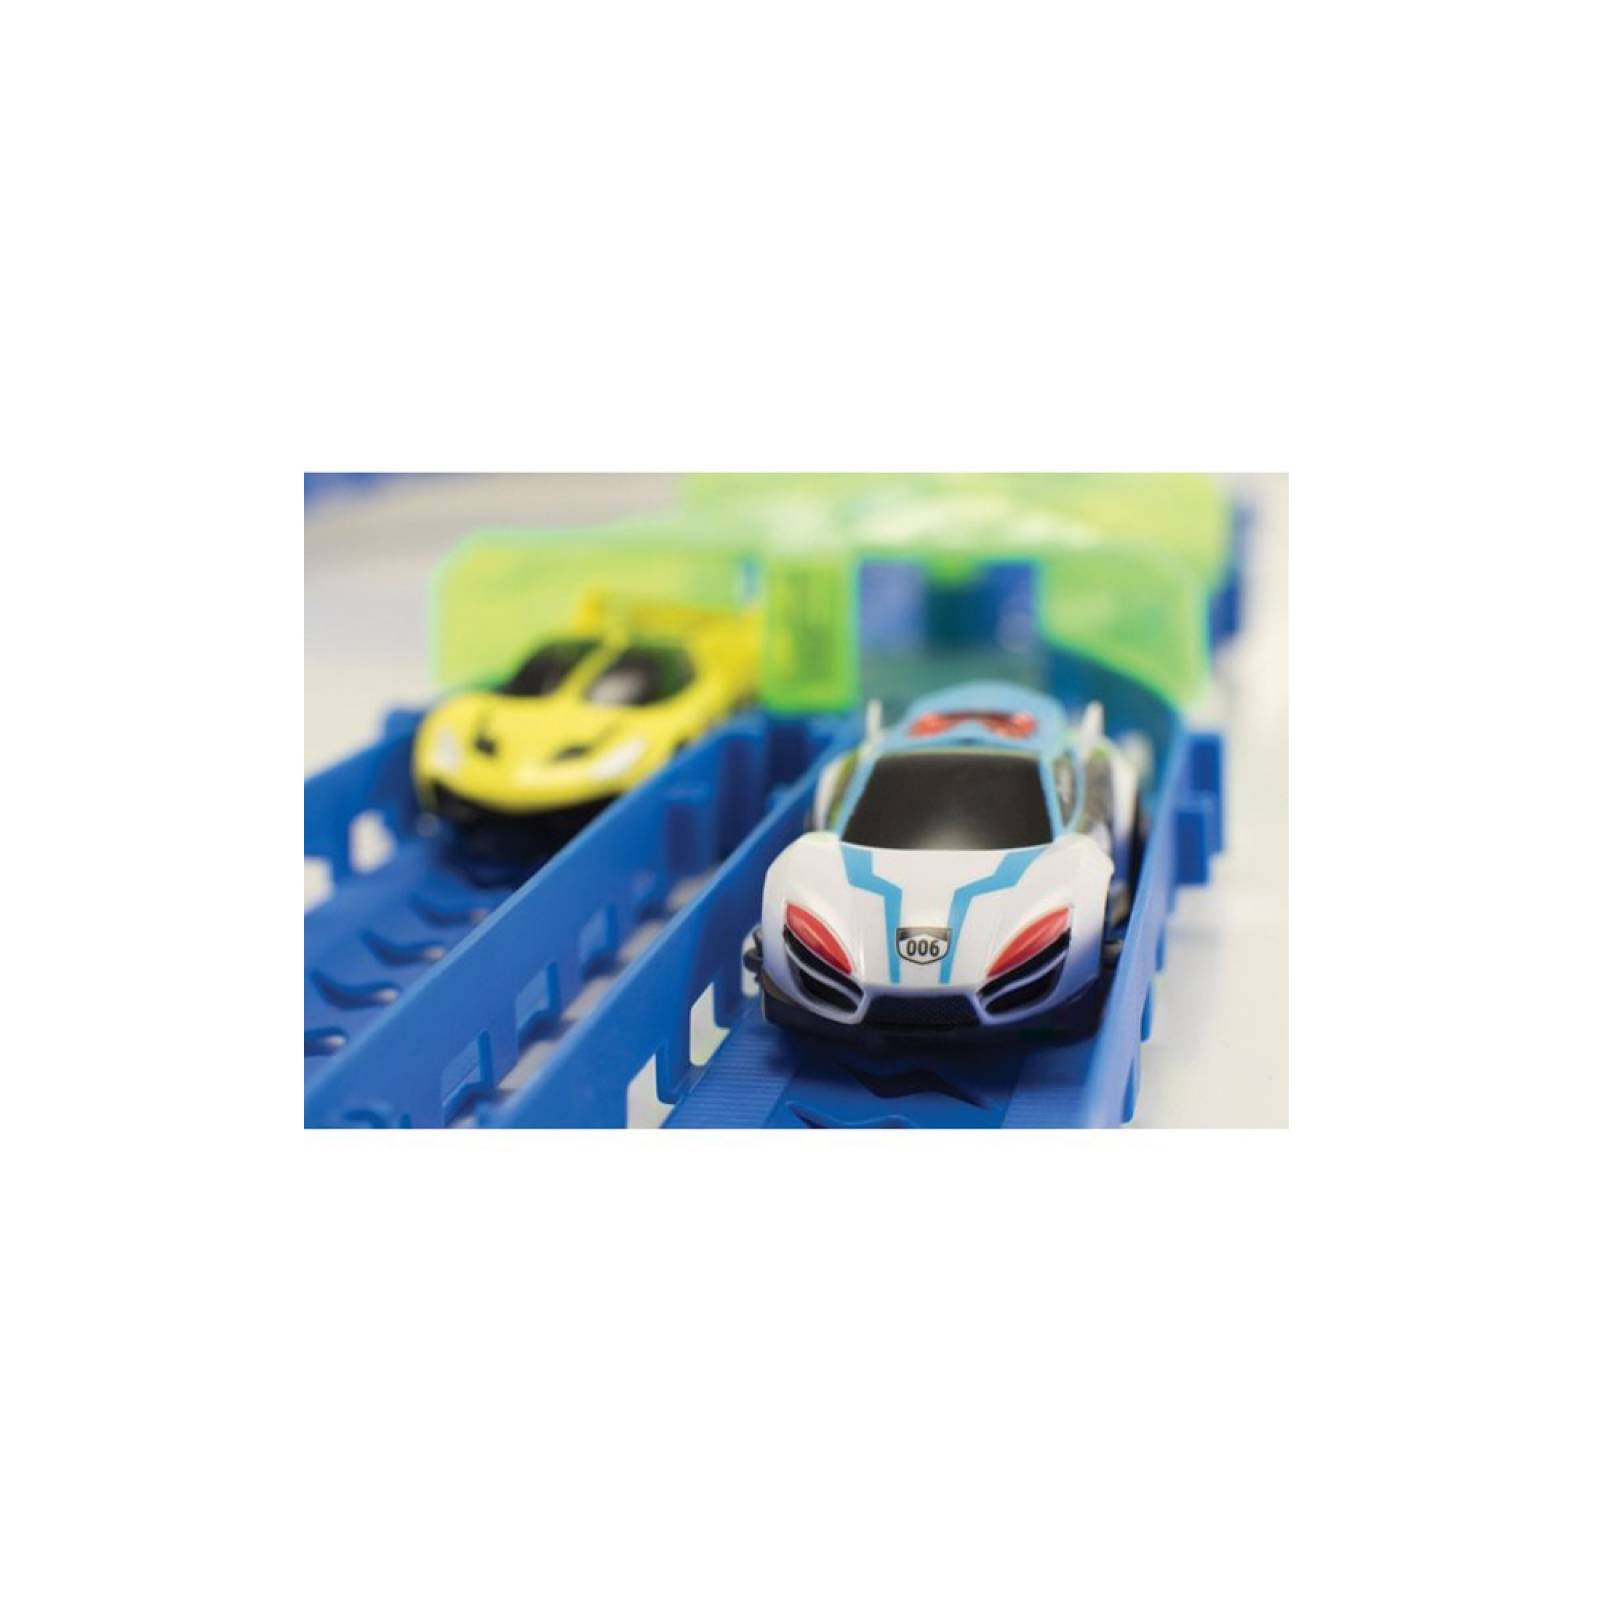 Pista Autos Sensor Onda SkyLoop Raceway Wave Racer Toys